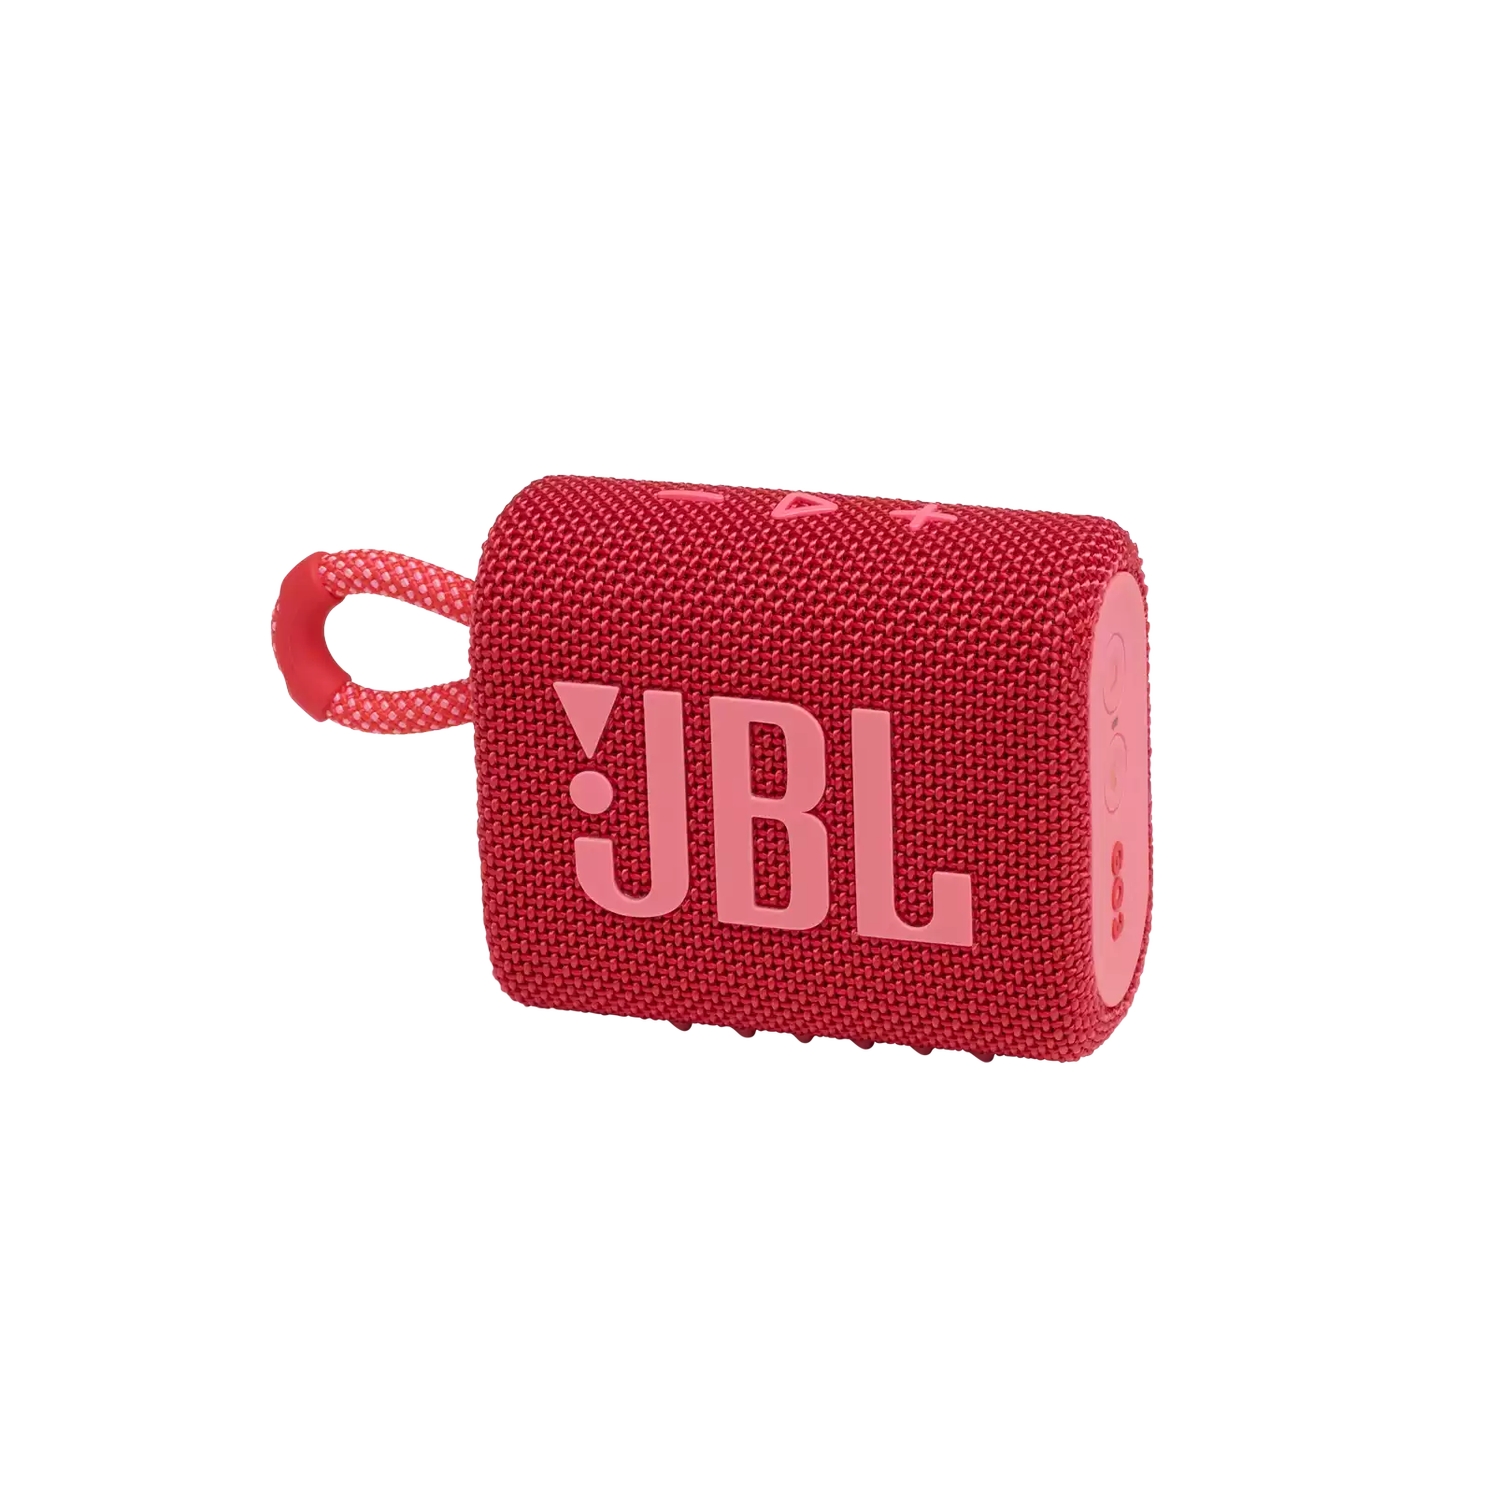 Портативная акустика JBL GO 3 красная портативная акустика jbl go 2 мятный